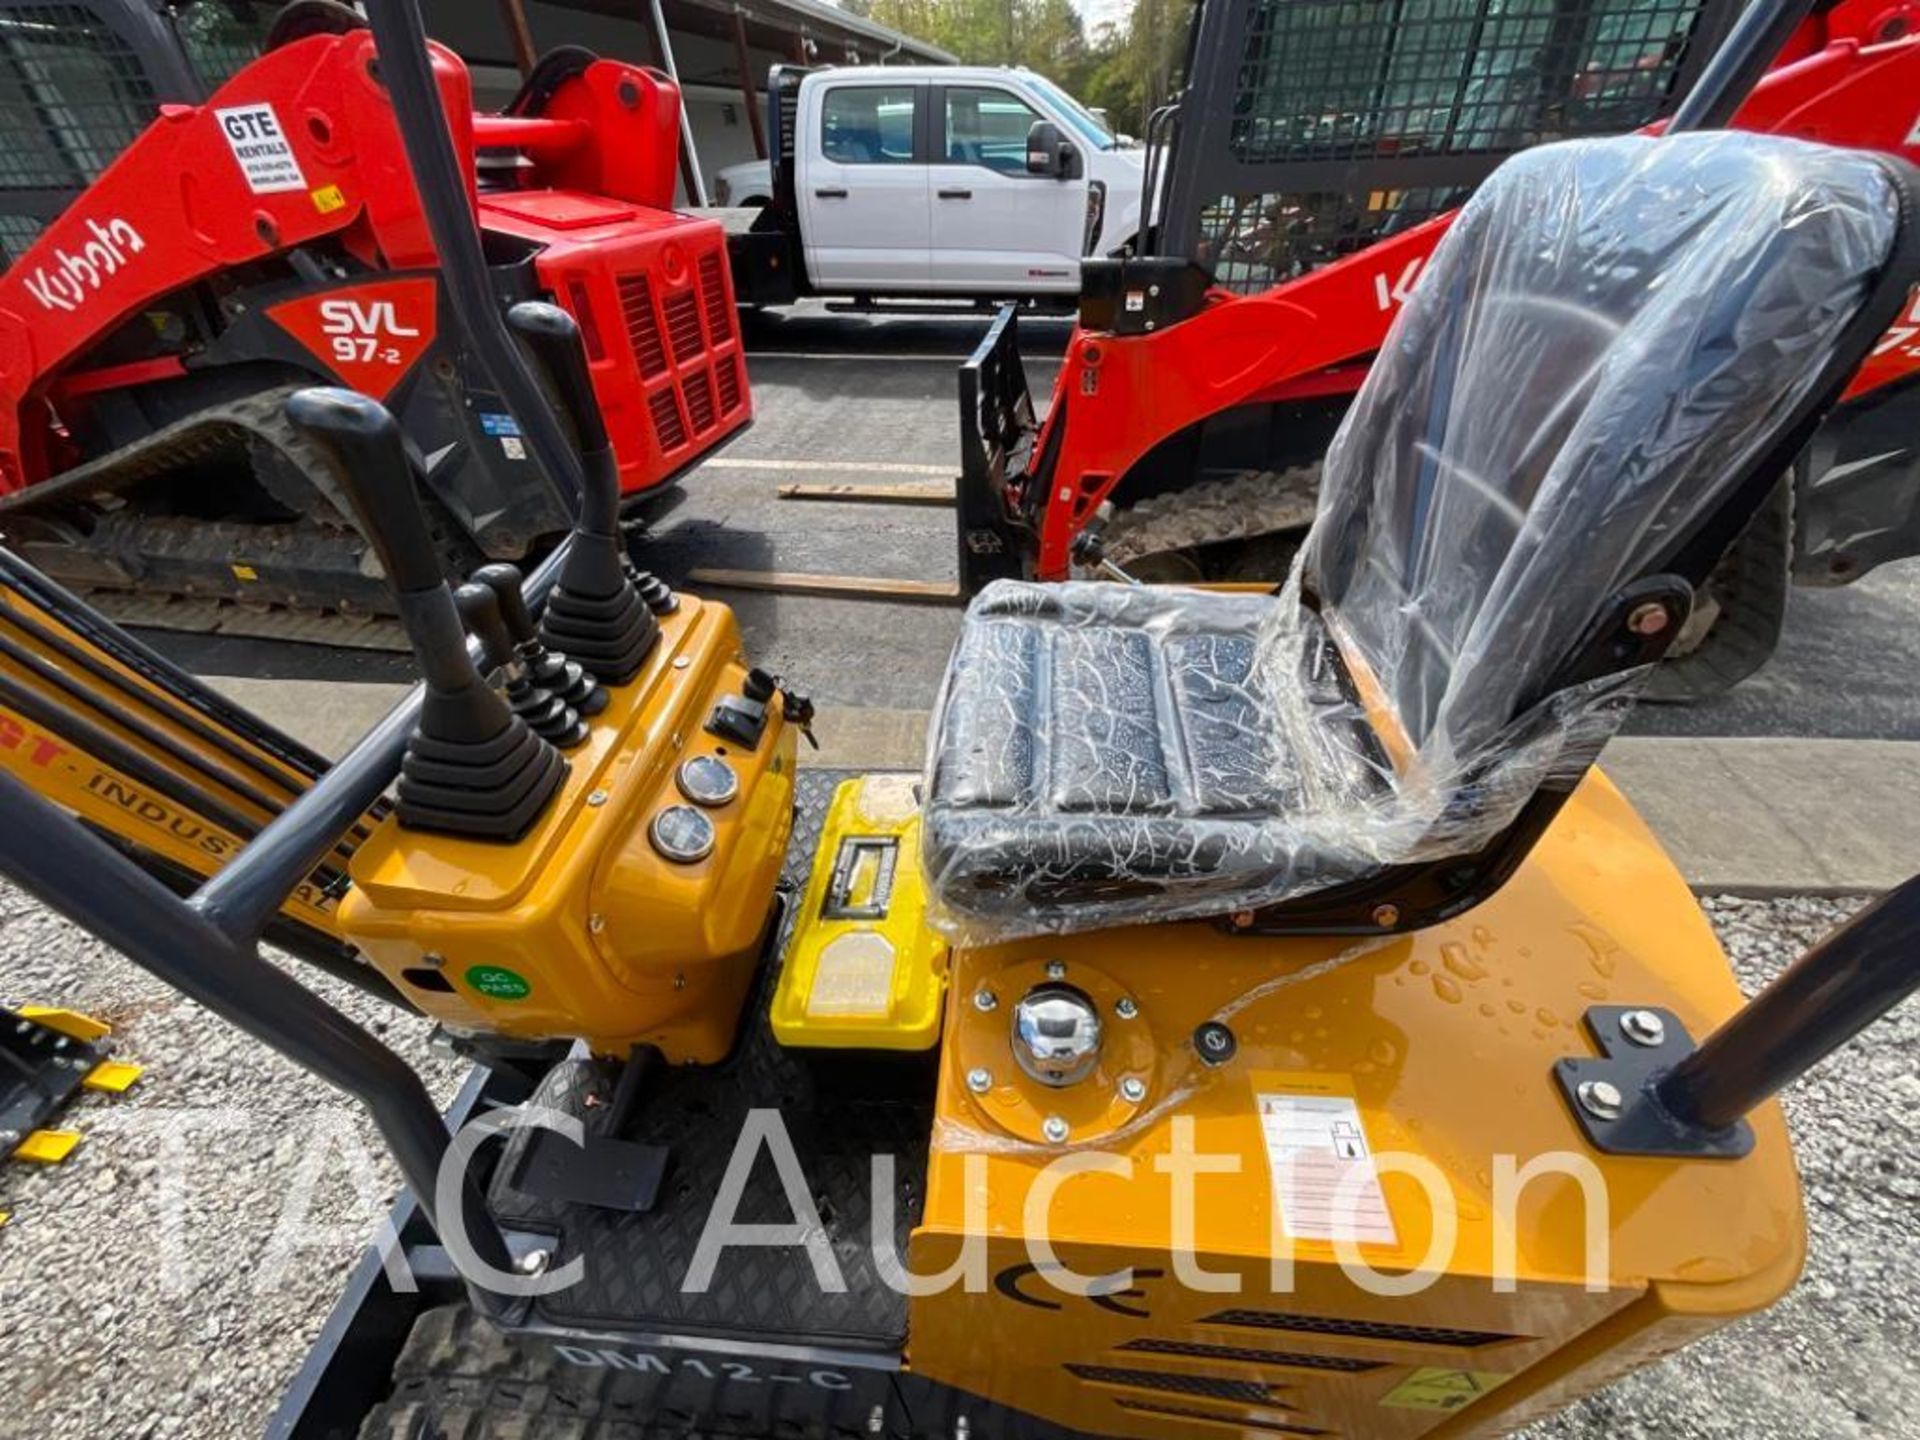 New AGT DM12-C Mini Excavator - Image 9 of 16